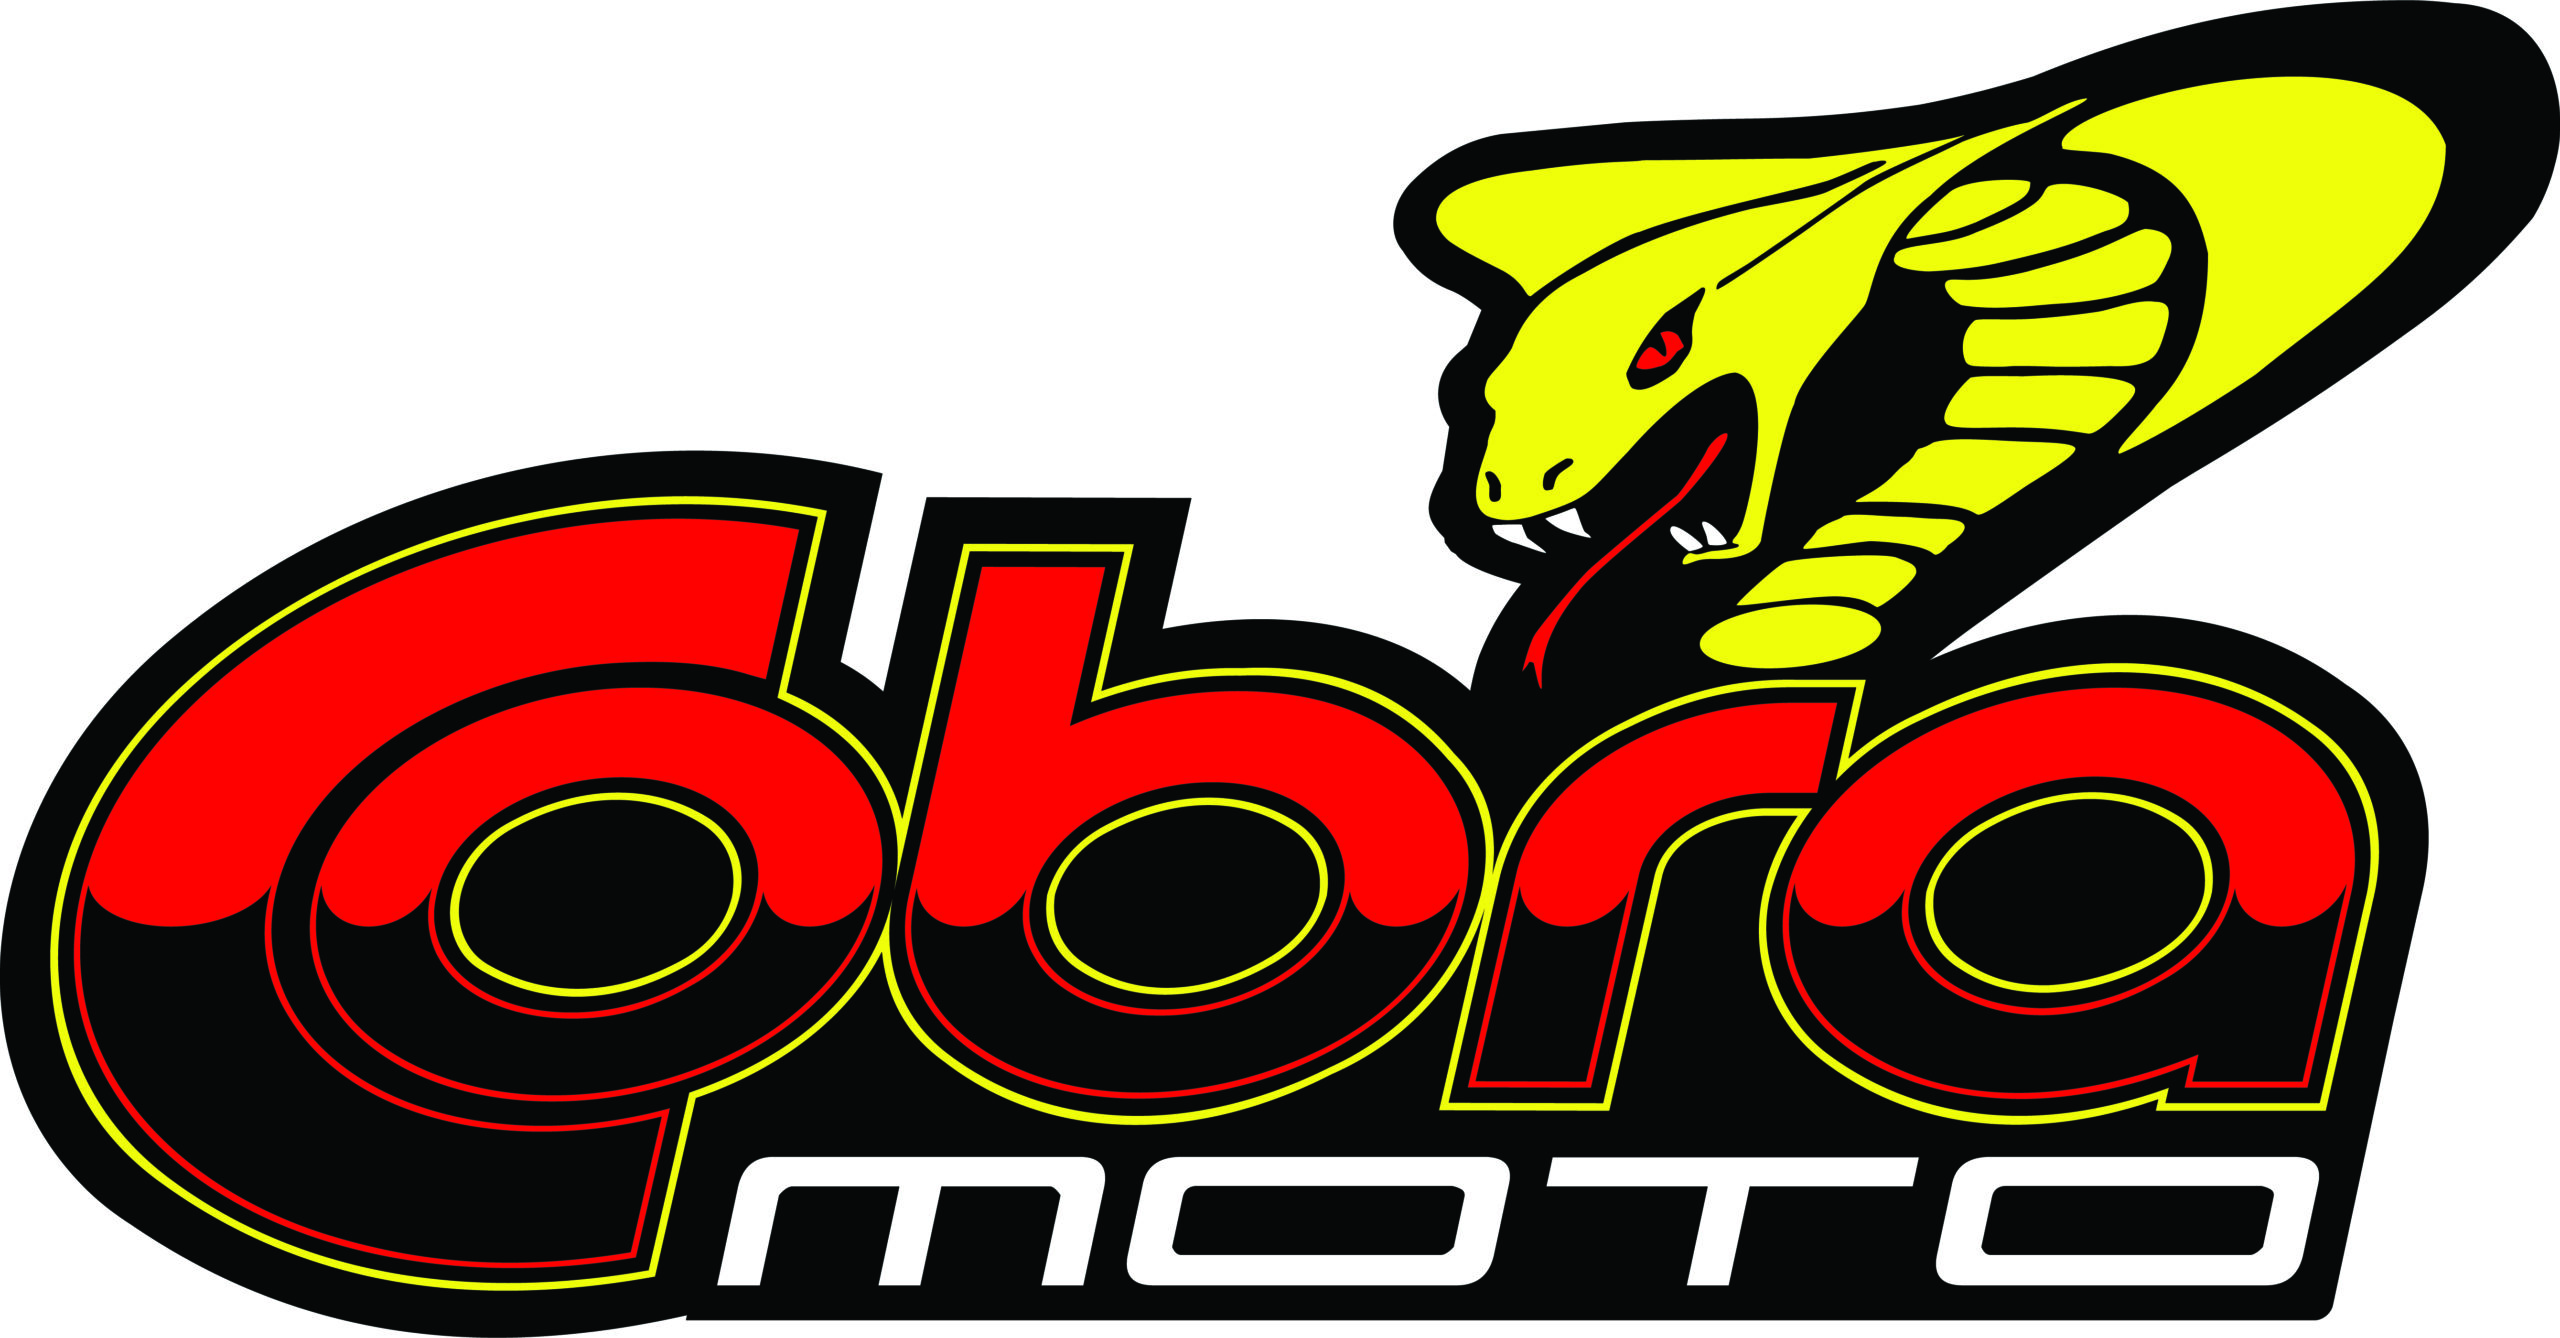 COBRA MOTO TRAILER STICKER – LARGE – Cobra MOTO